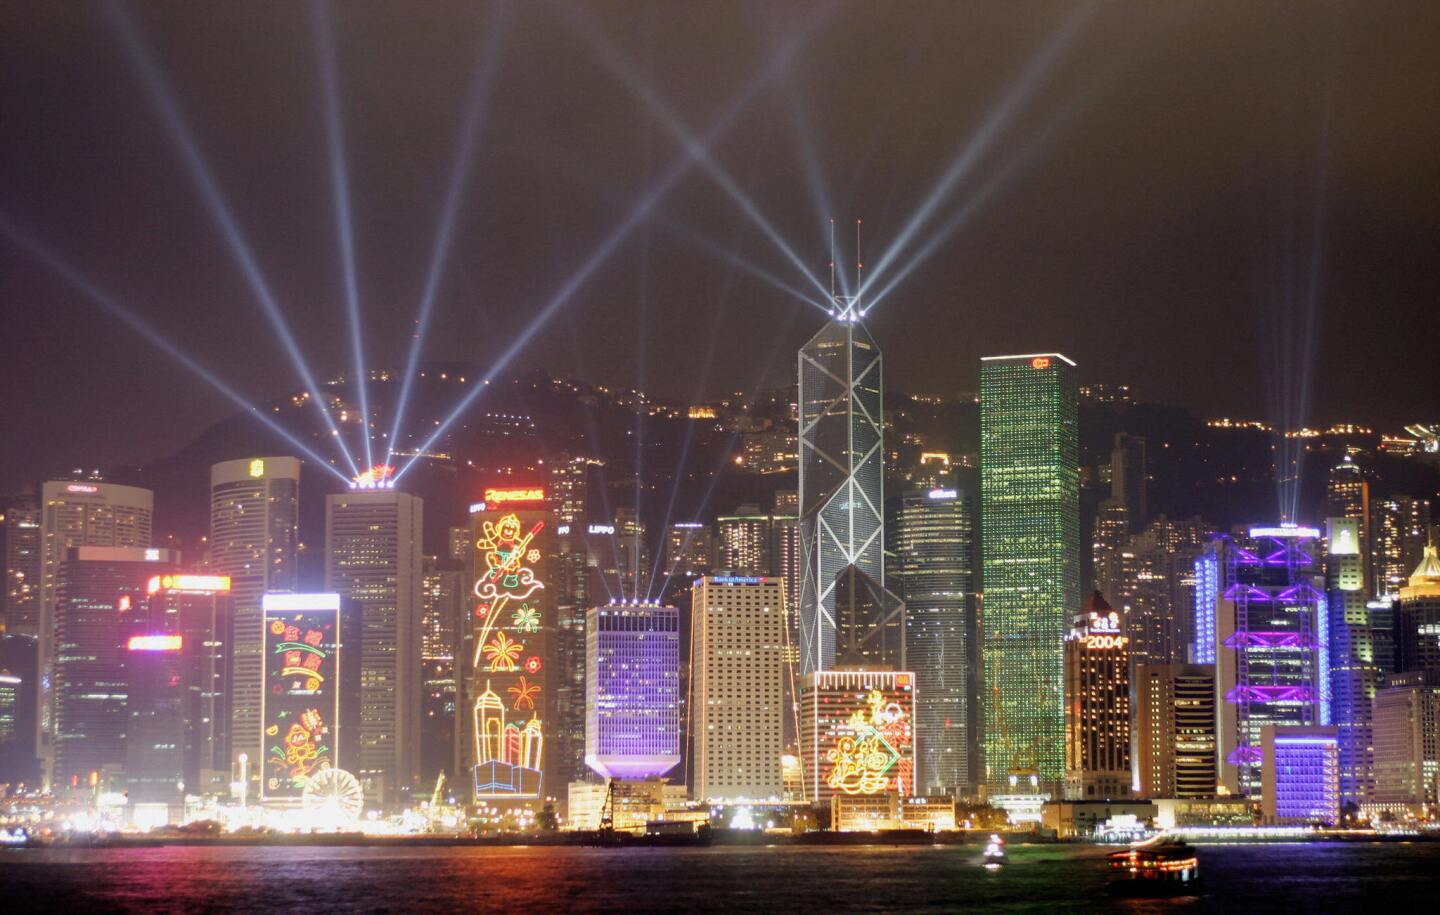 'Symphony of Lights' in Hong Kong